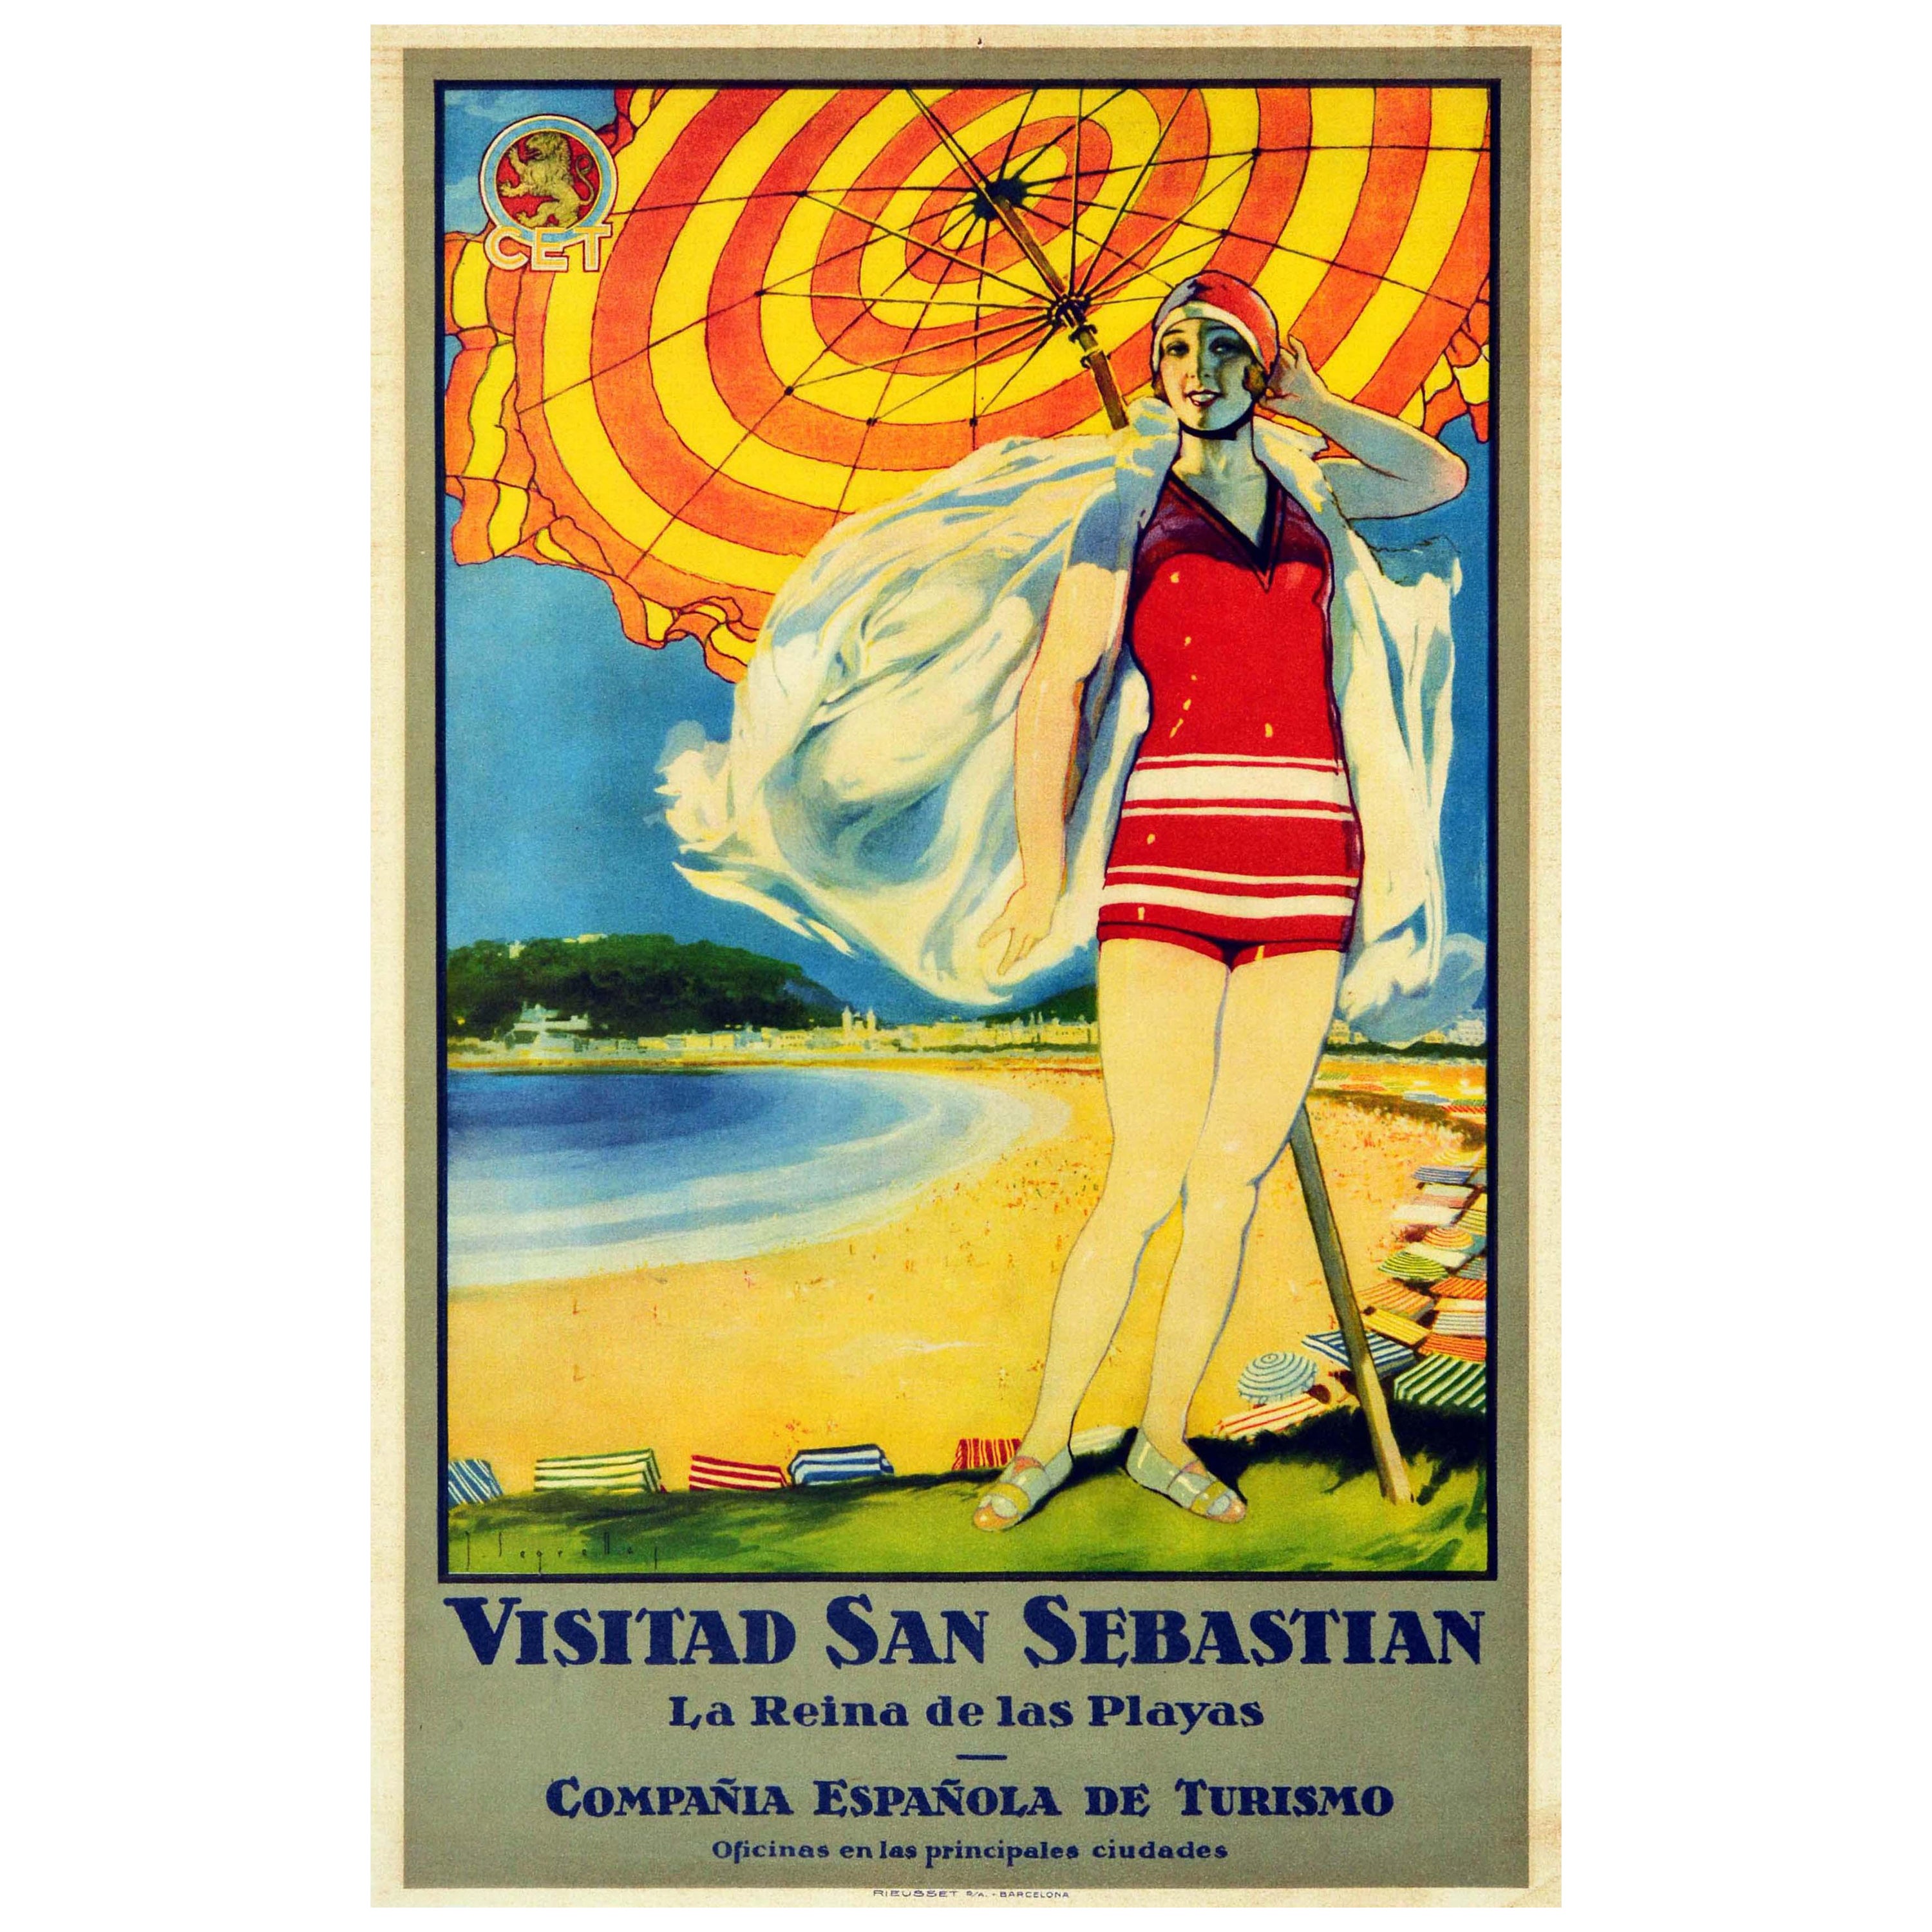 Original Vintage Travel Poster Visitad San Sebastian Queen Of The Beach Resort